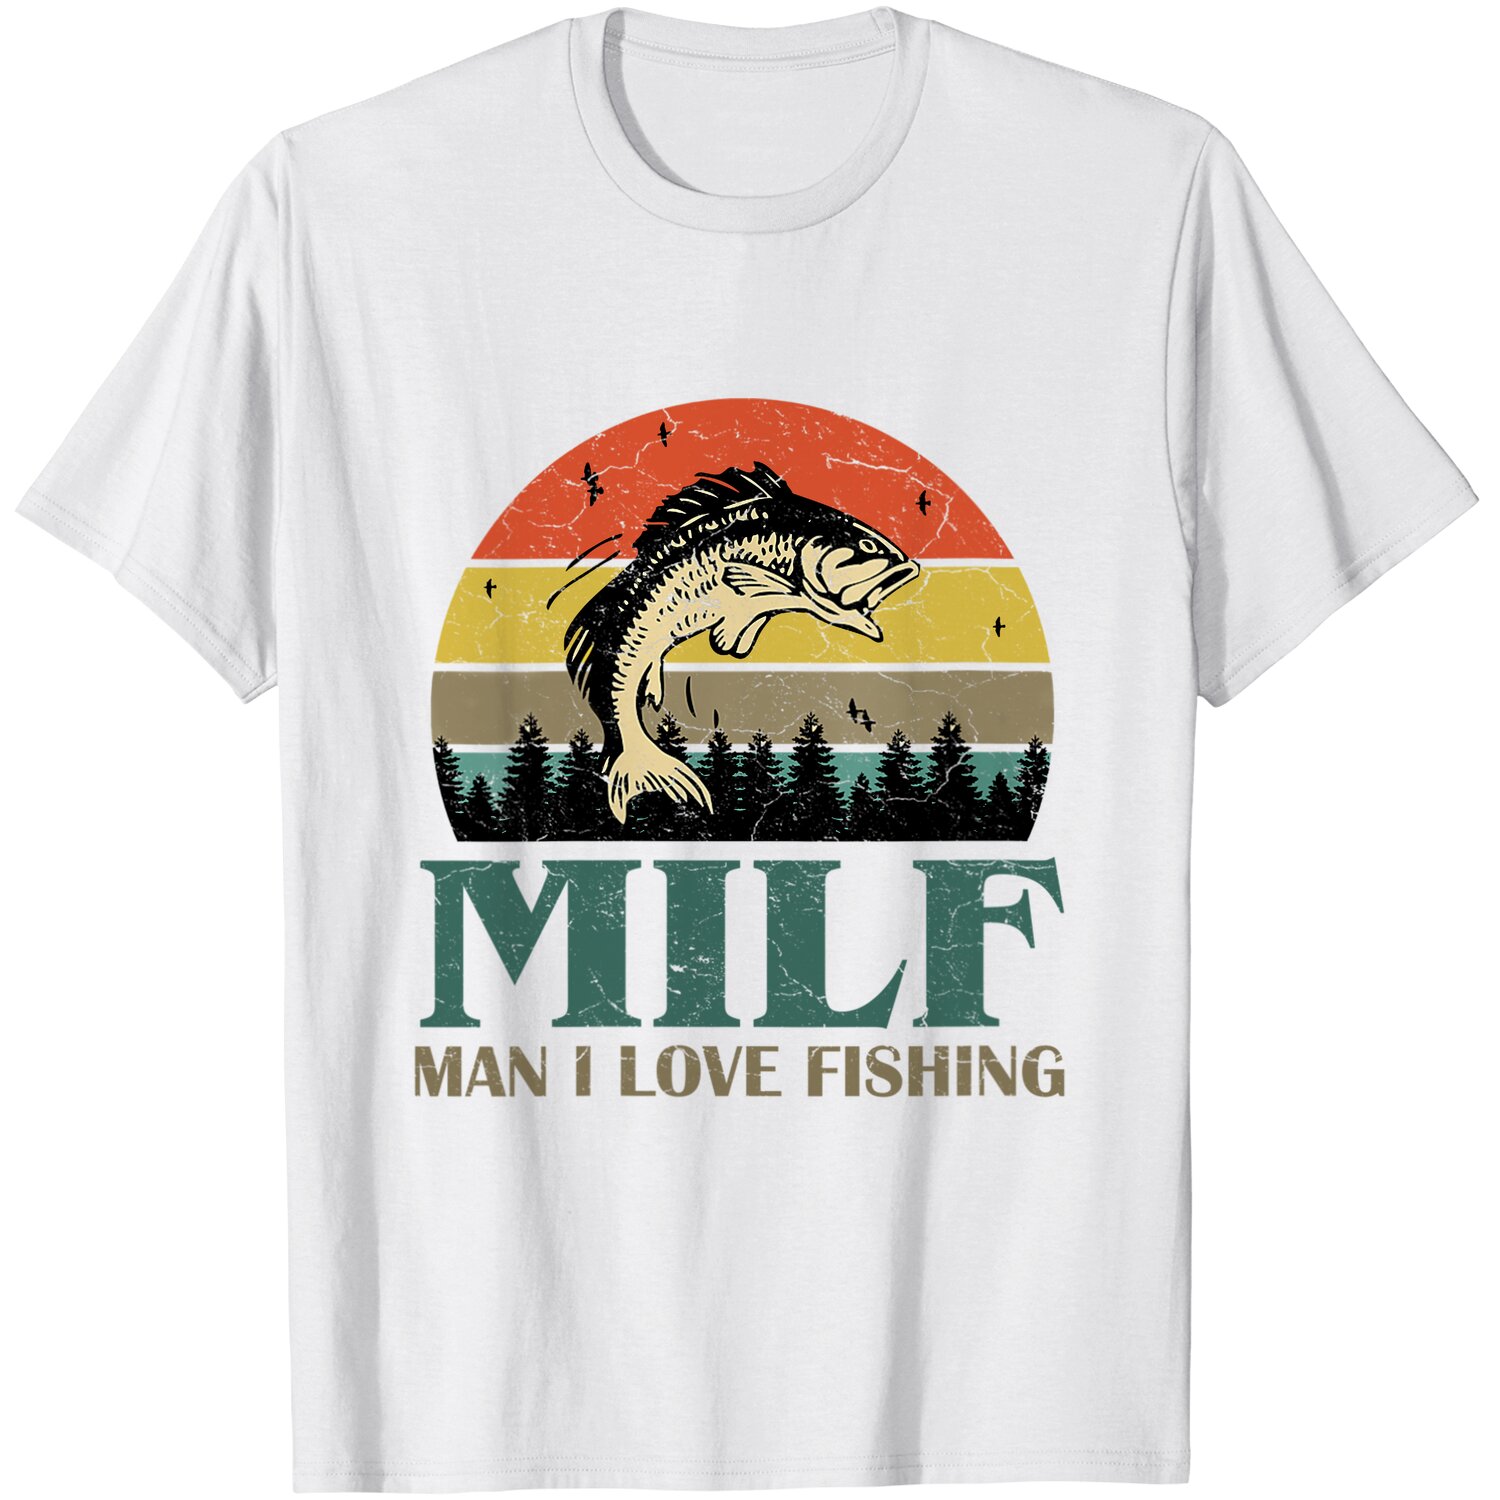 MILF-Man I Love Fishing Funny T-Shirt